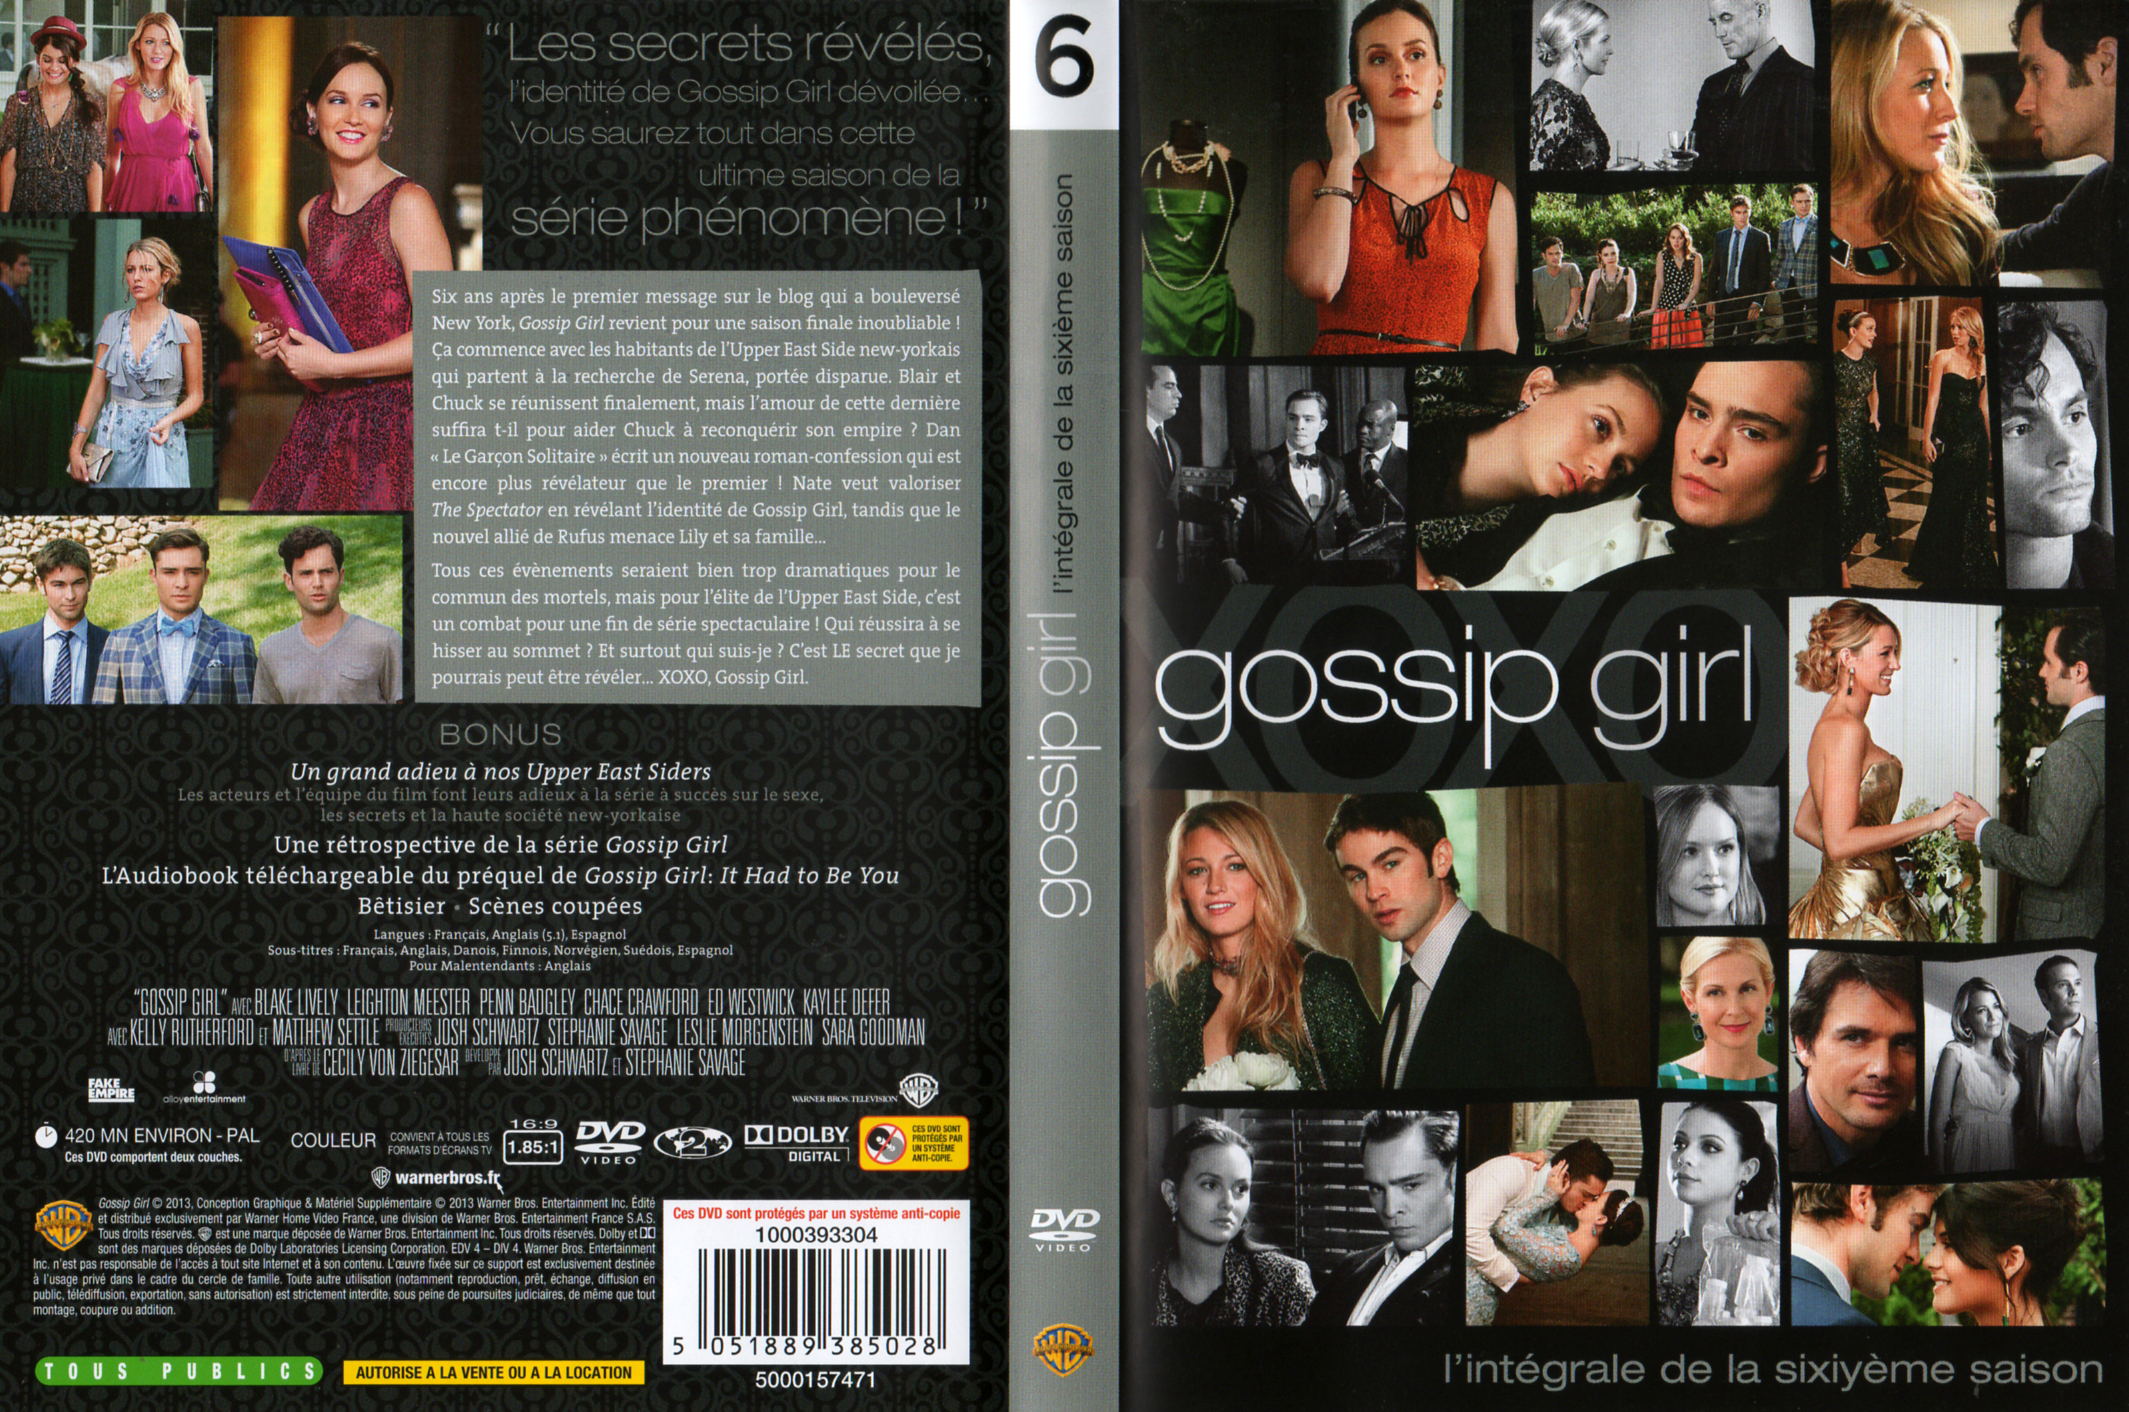 Jaquette DVD Gossip girl Saison 6 COFFRET